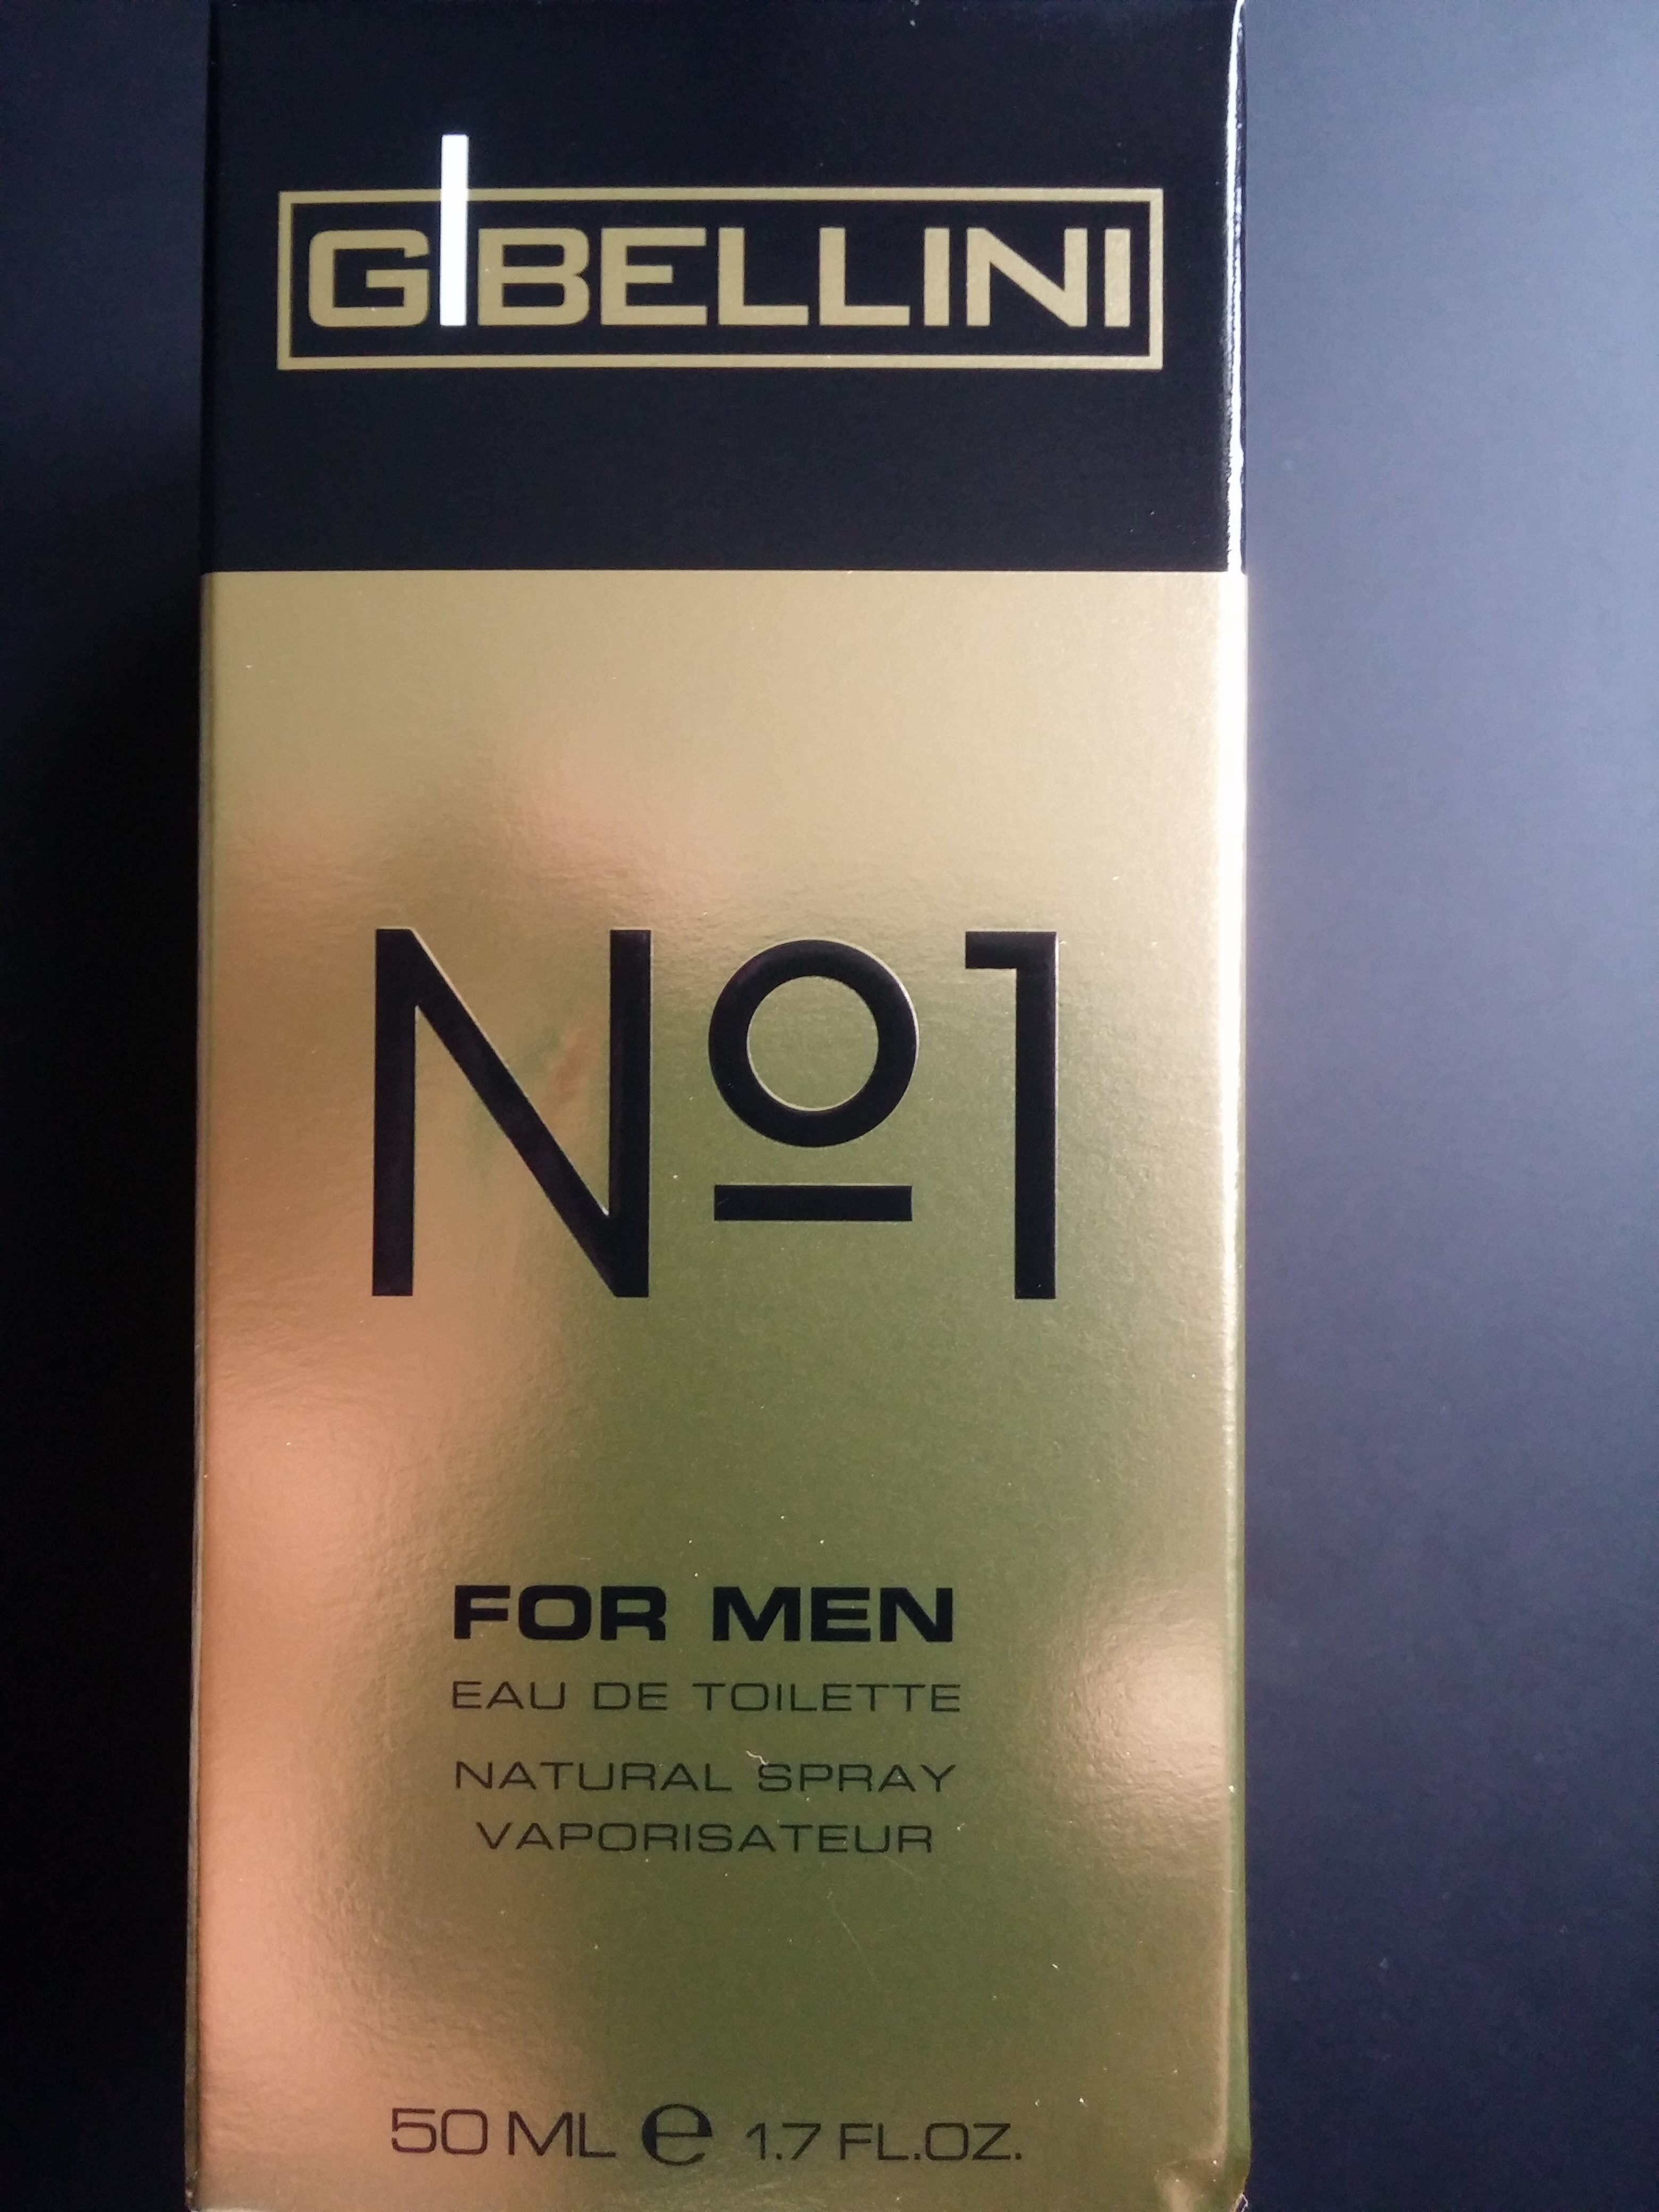 Gibellini N°1 for men - Product - en